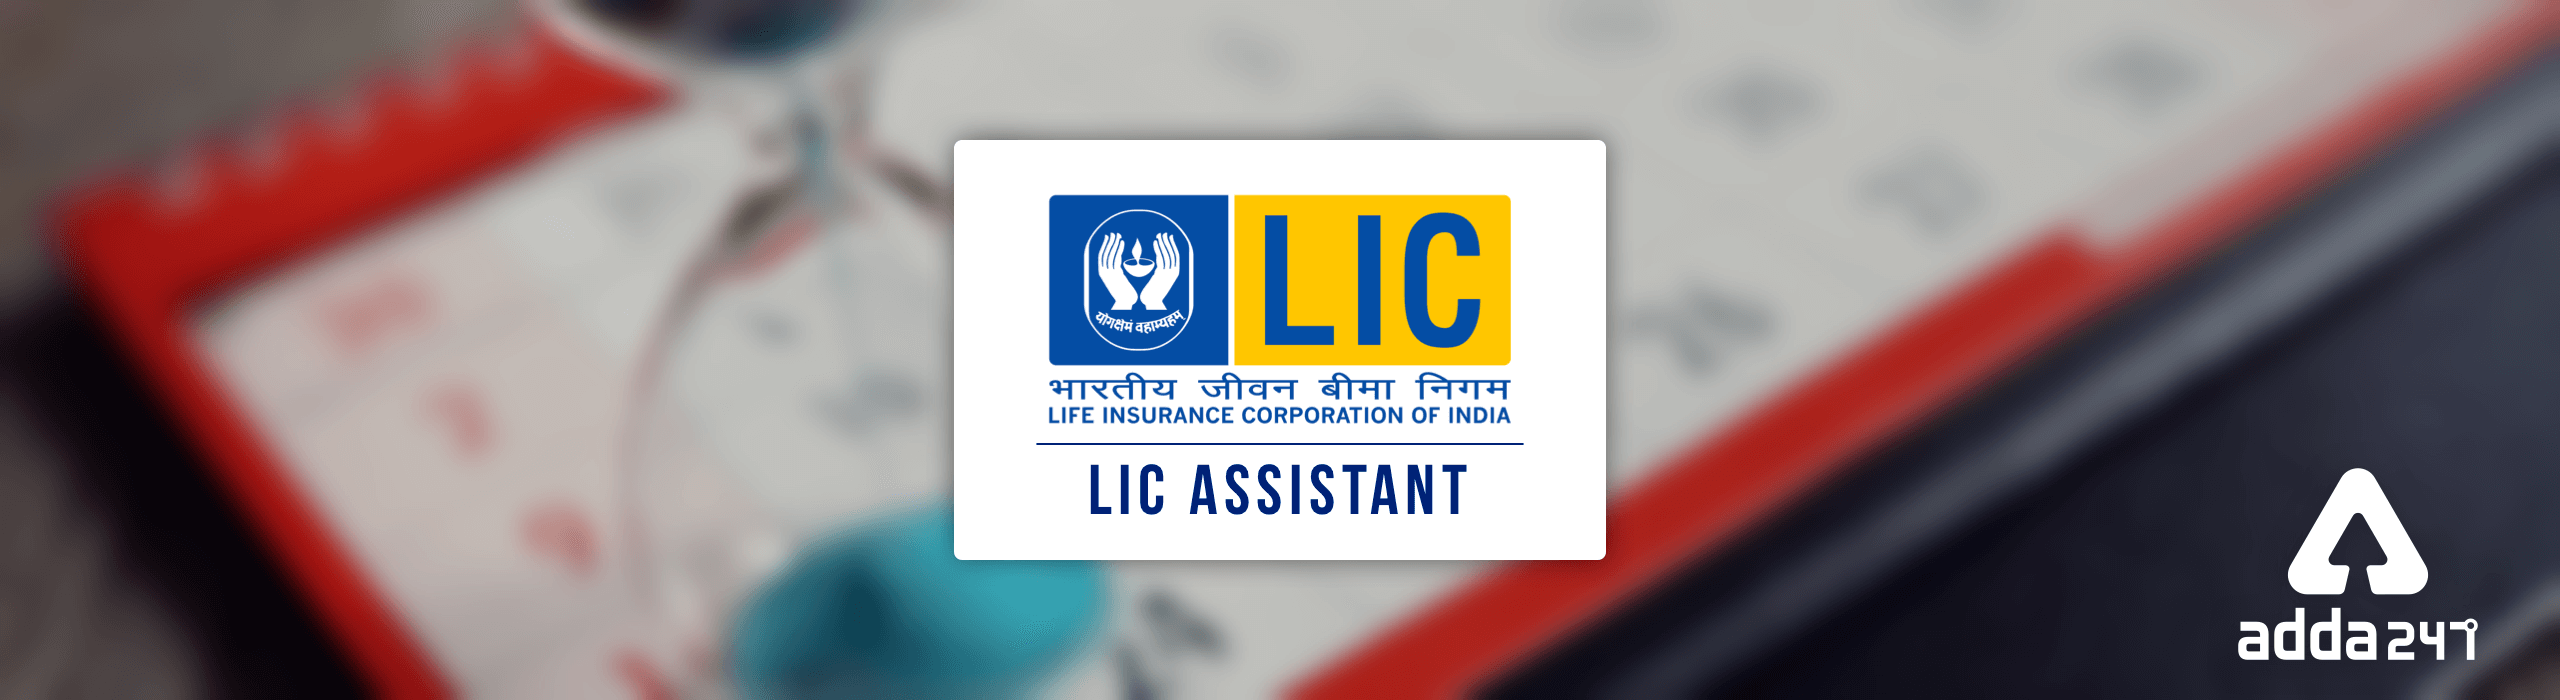 LIC Assistant 2020